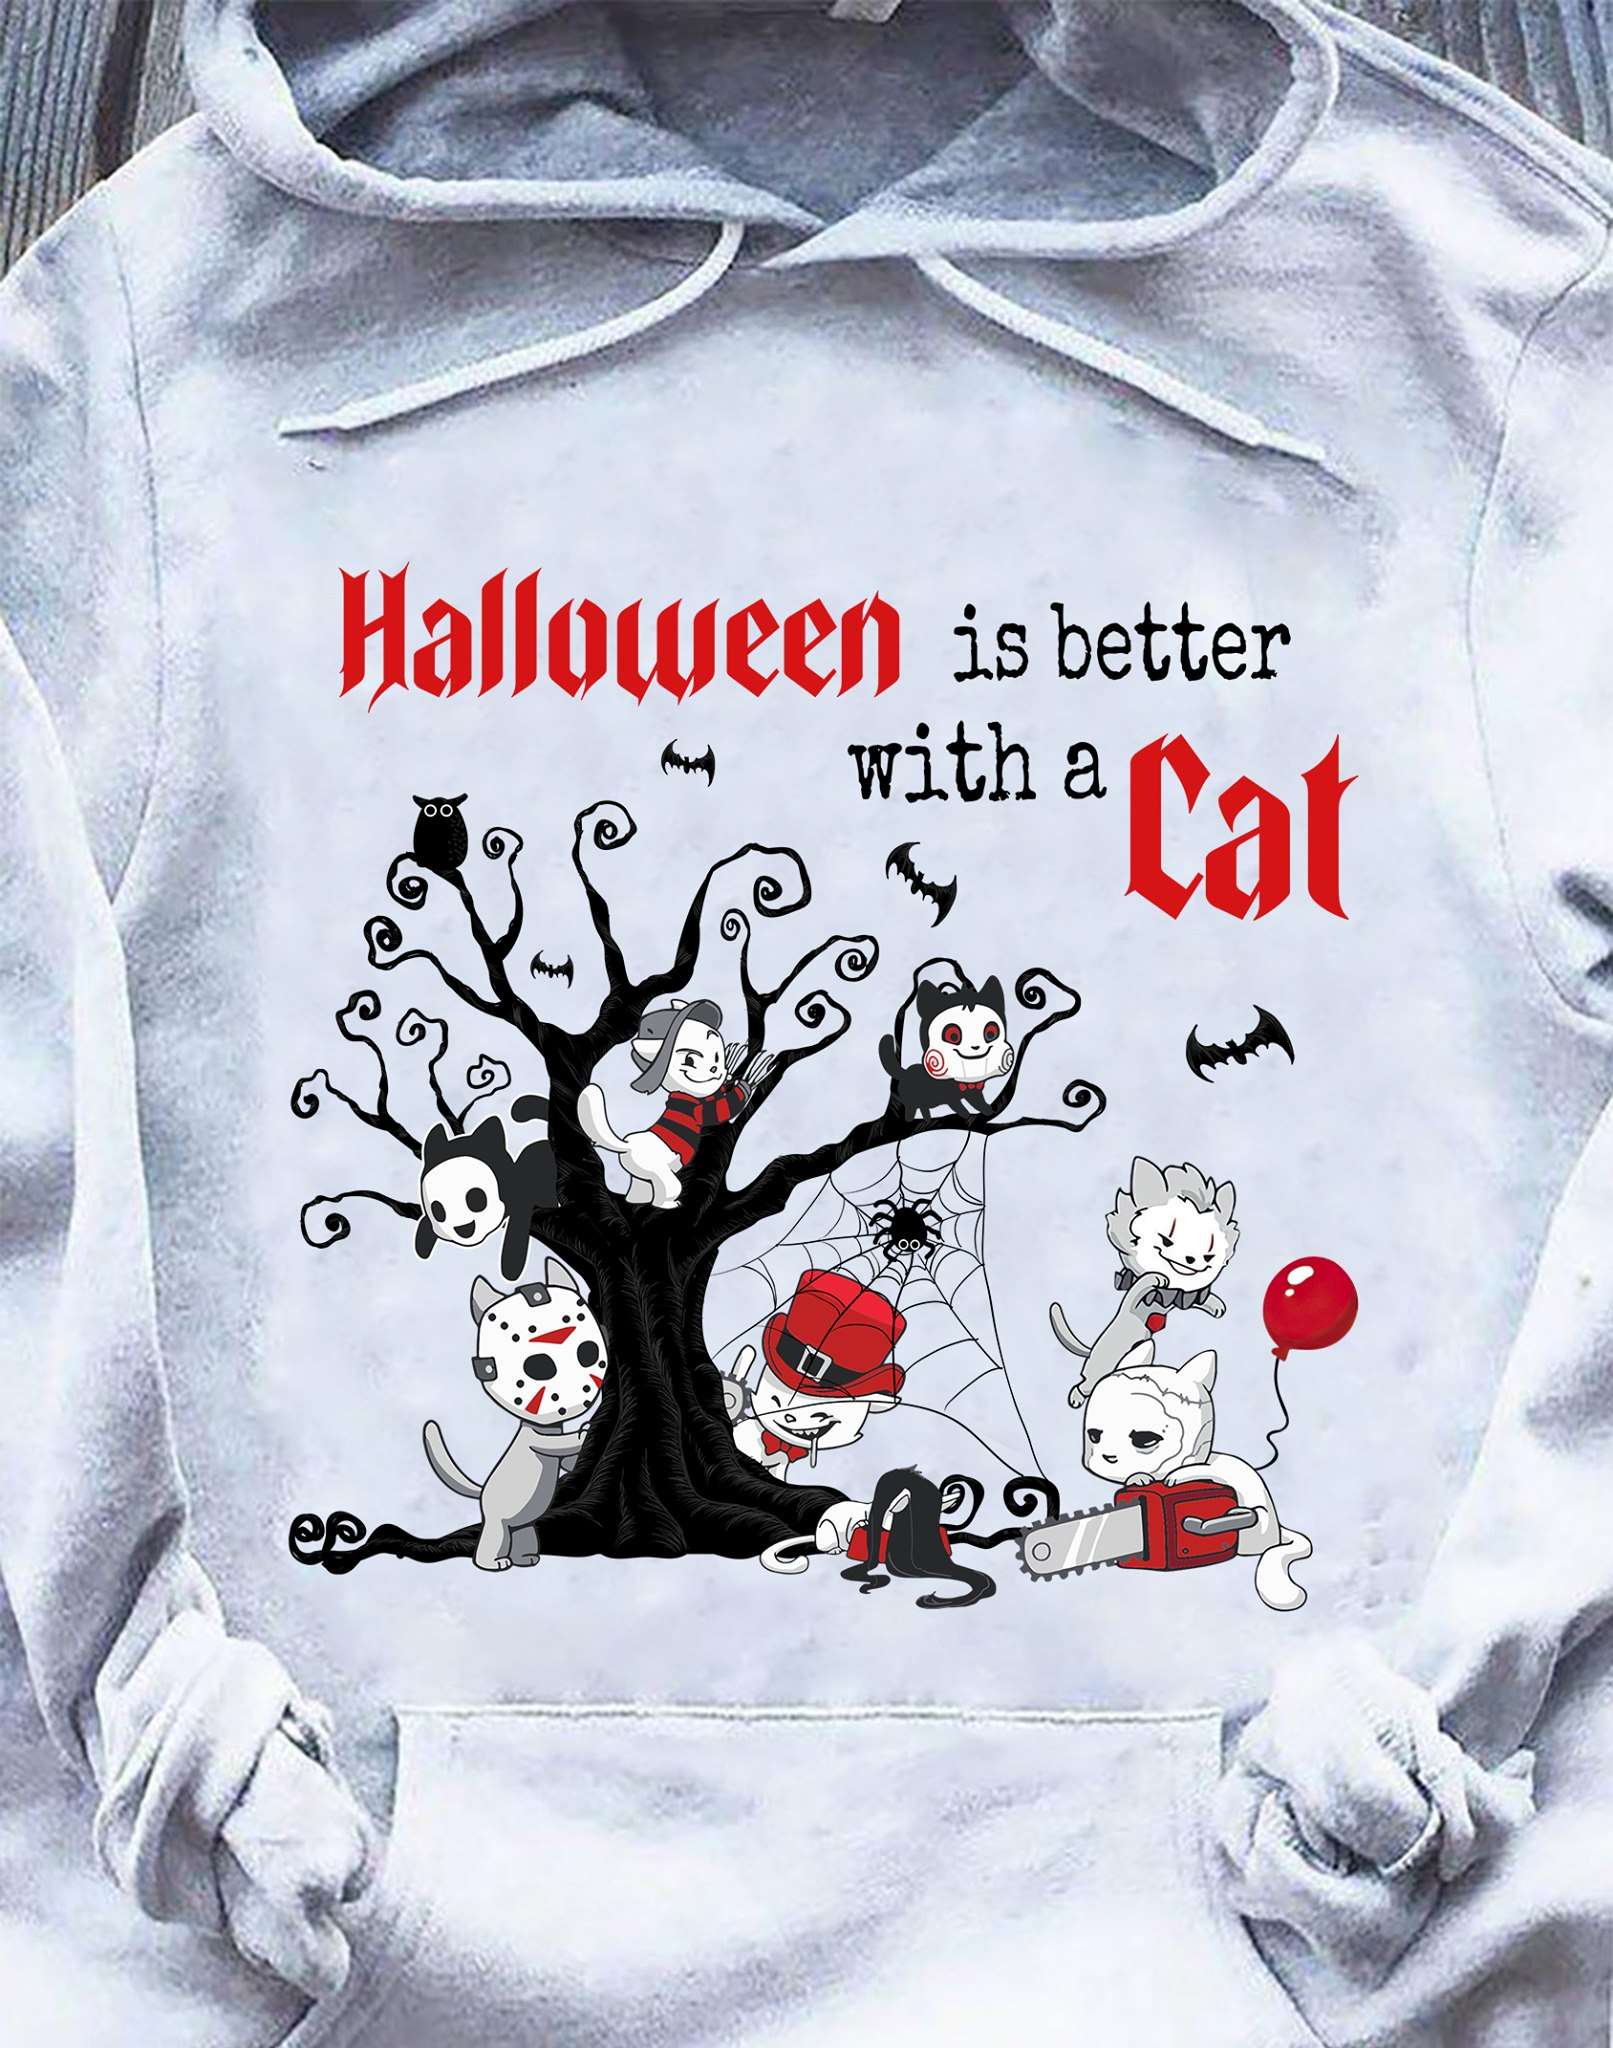 Halloween is better with a cat - Halloween cat costume, Cat lover Halloween gift